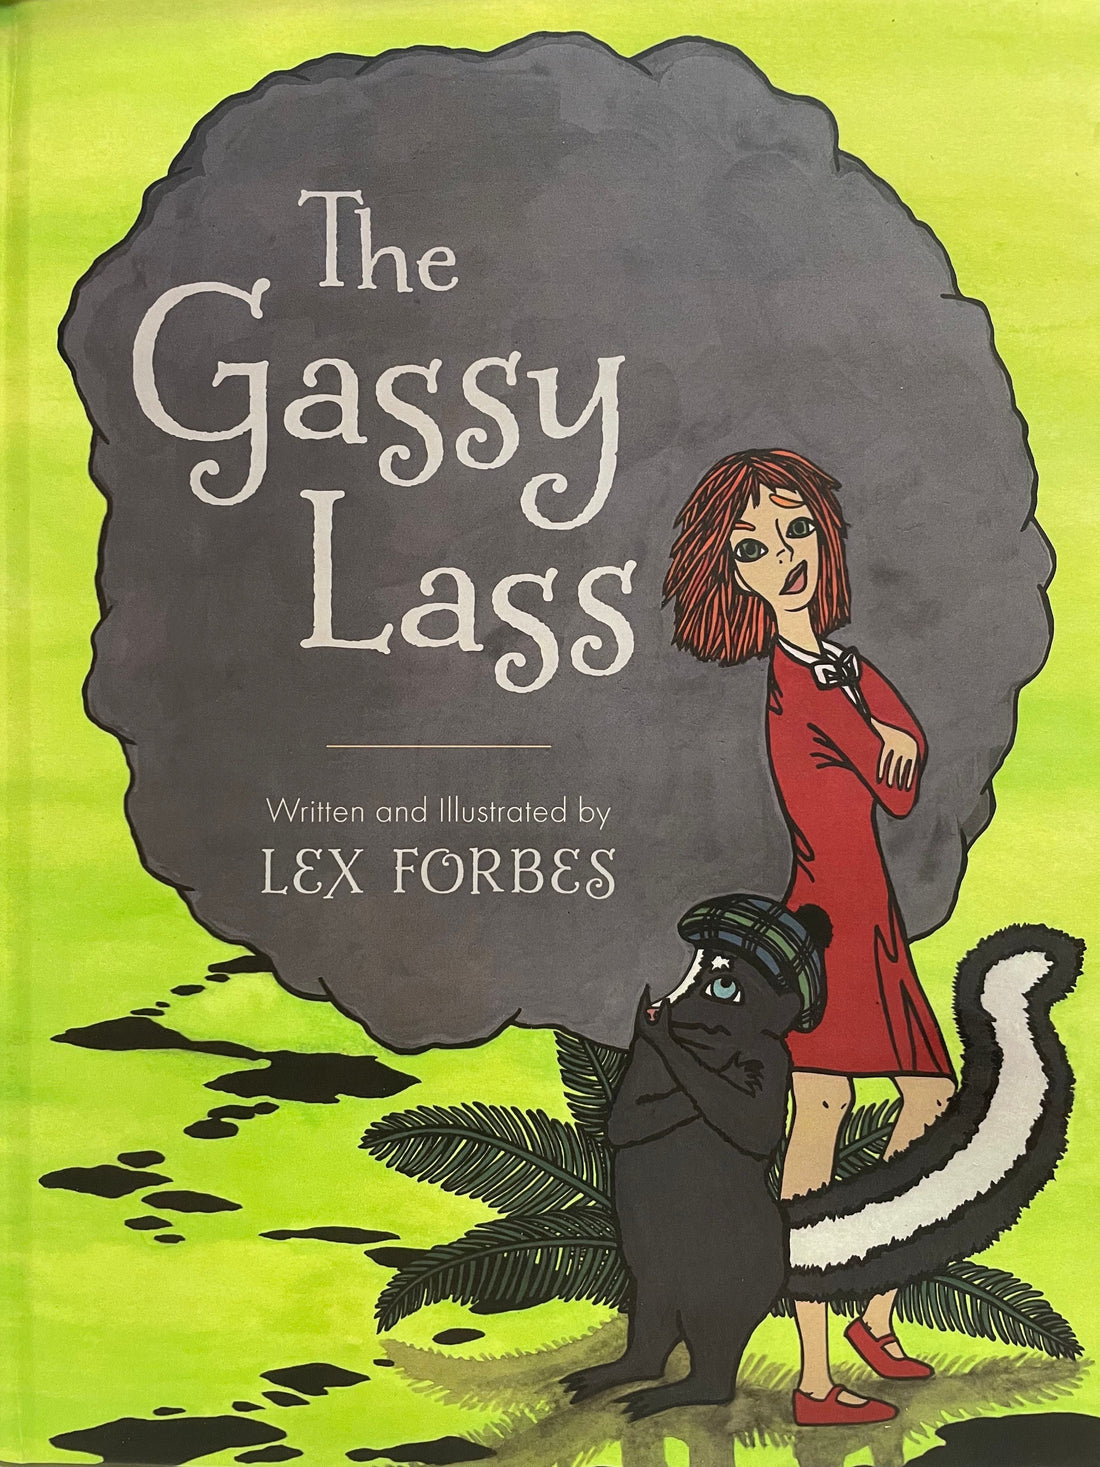 "The Gassy Lass" Children's Book